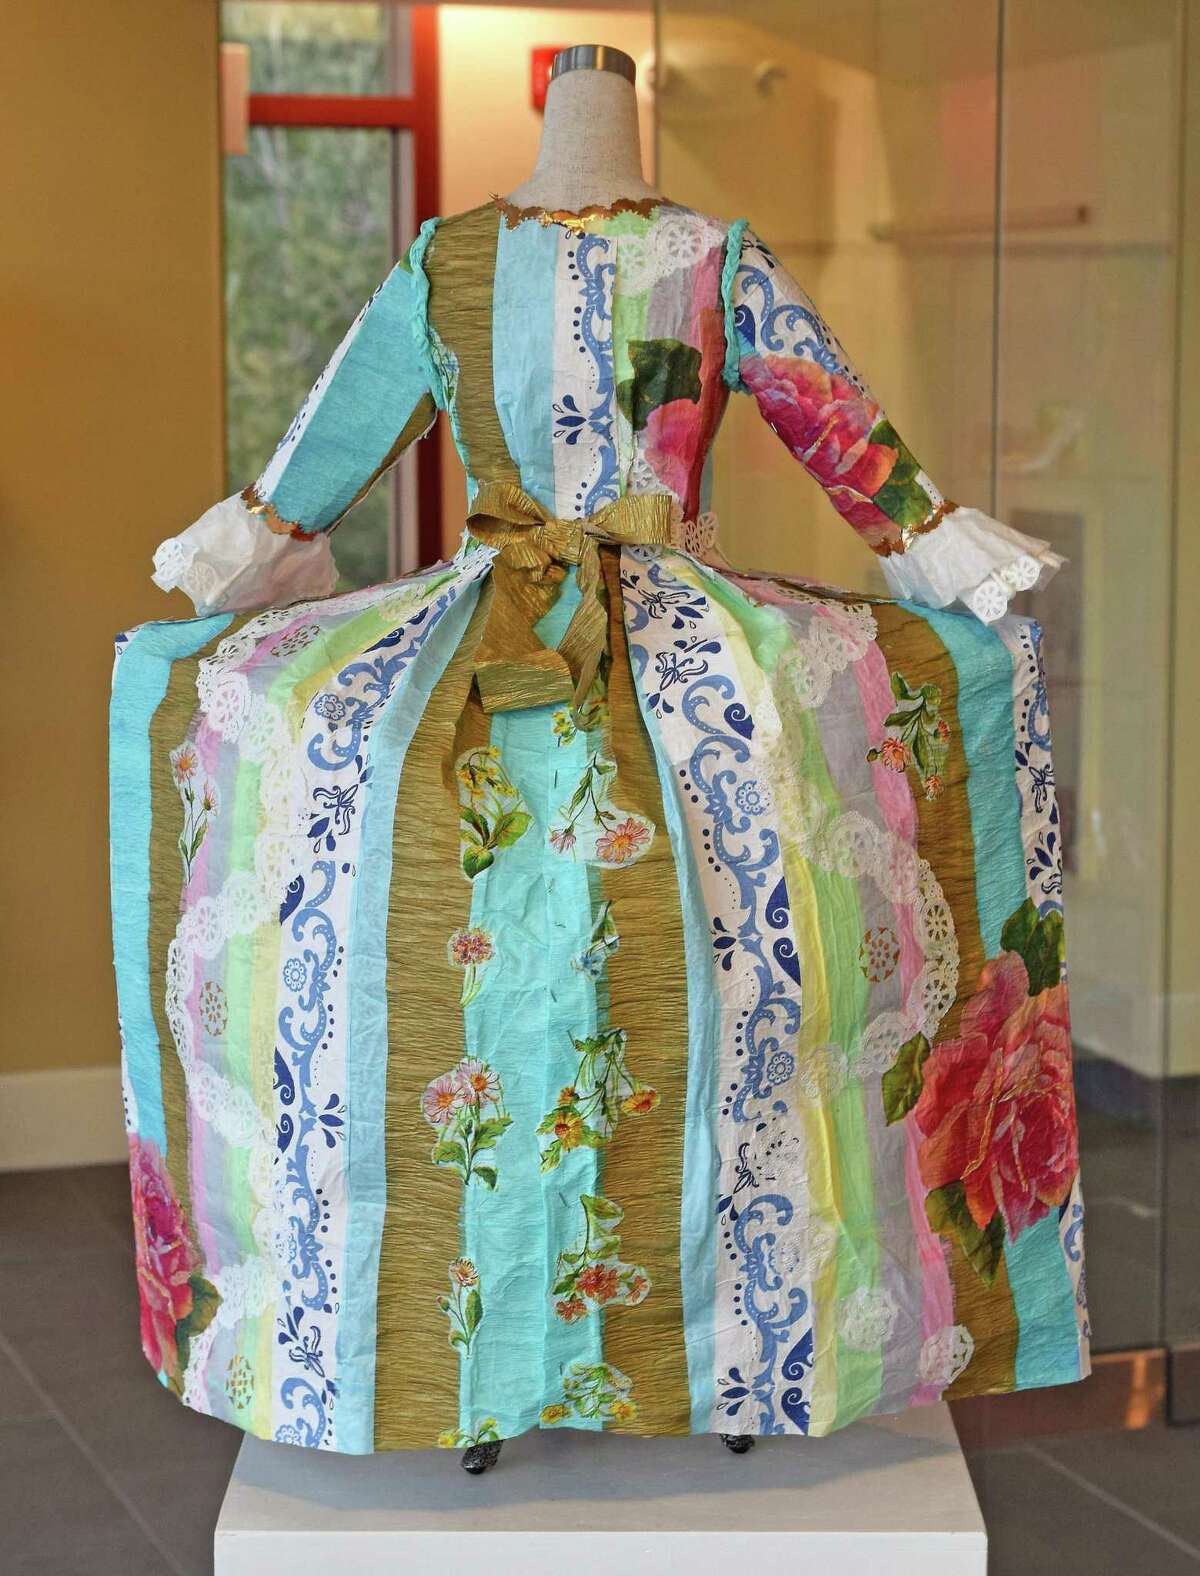 Sarah Gardella's fashion creation merges Rococo style with a unique textile technique.